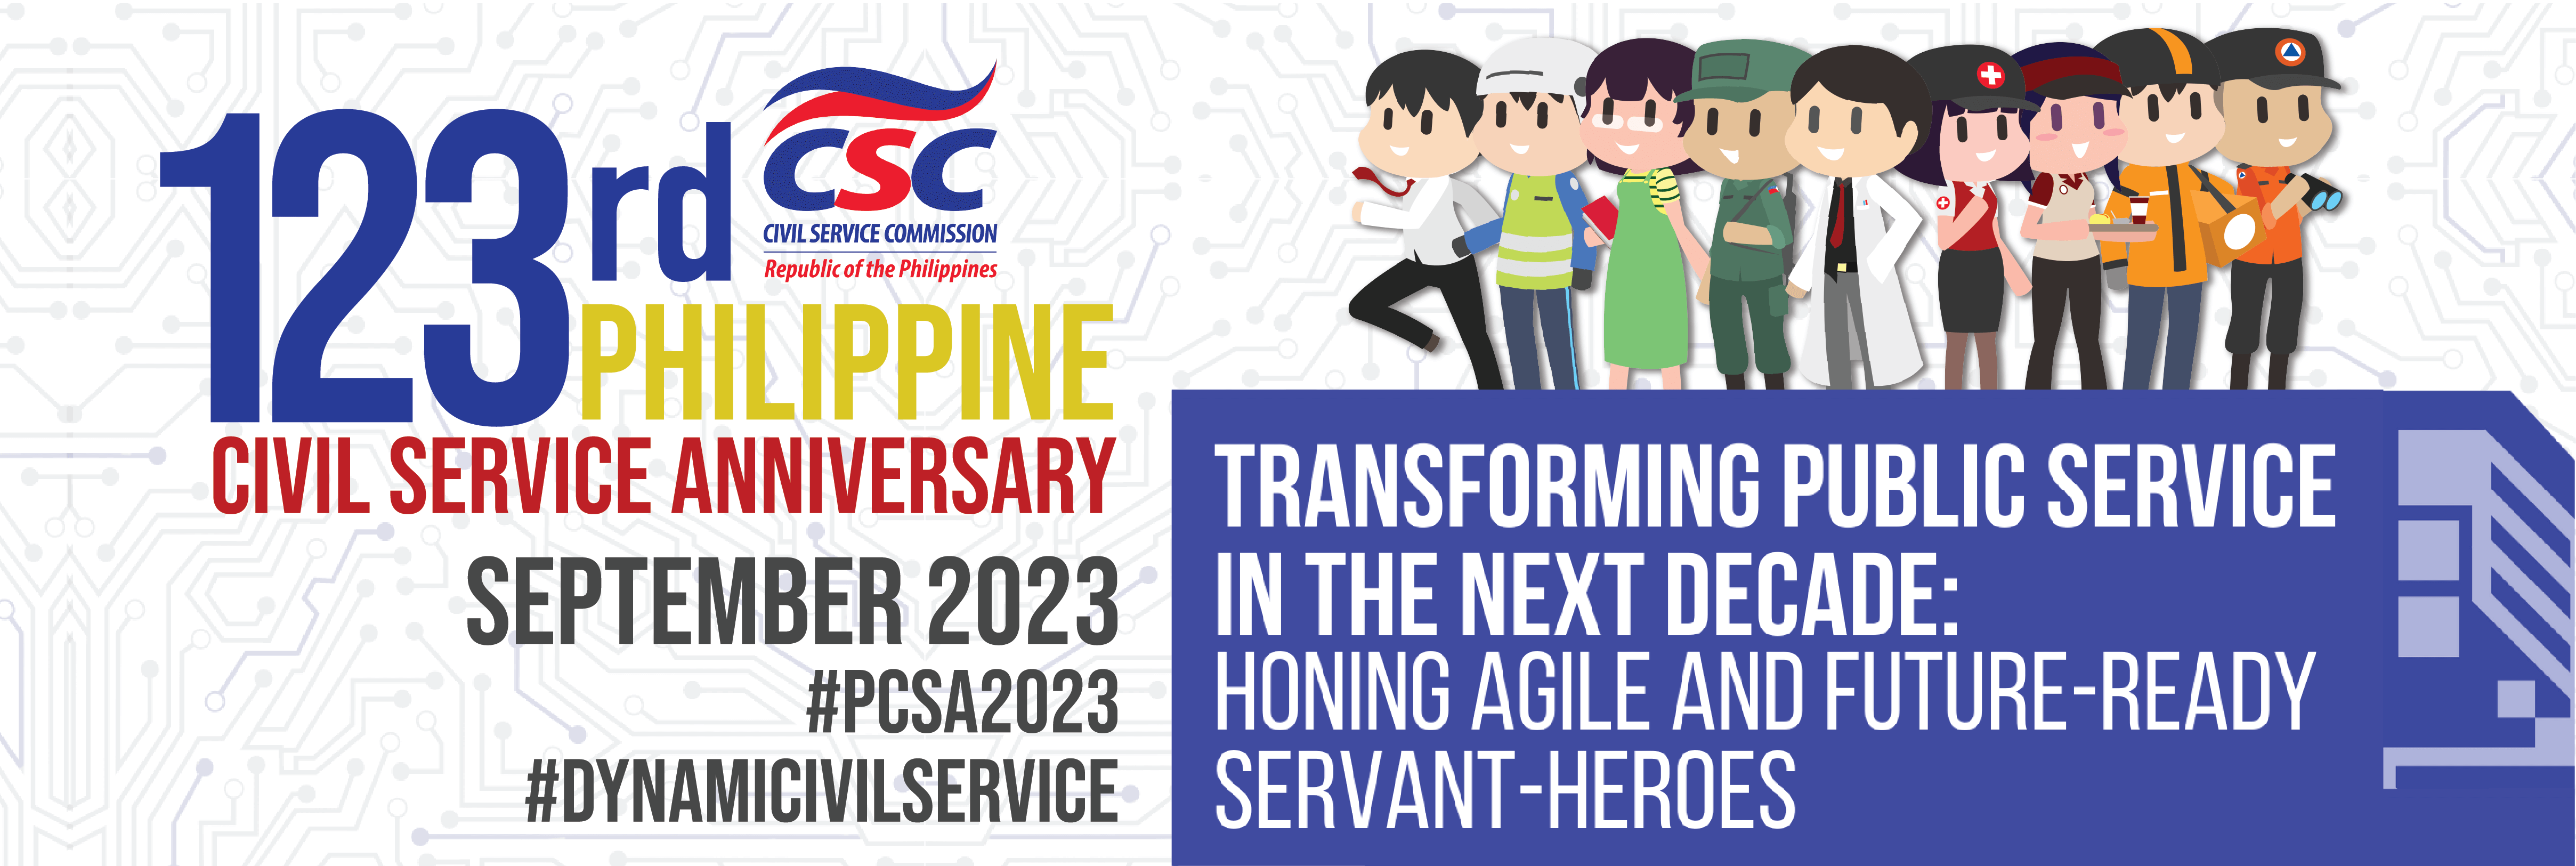 123rd Philippine Civil Service Anniversary